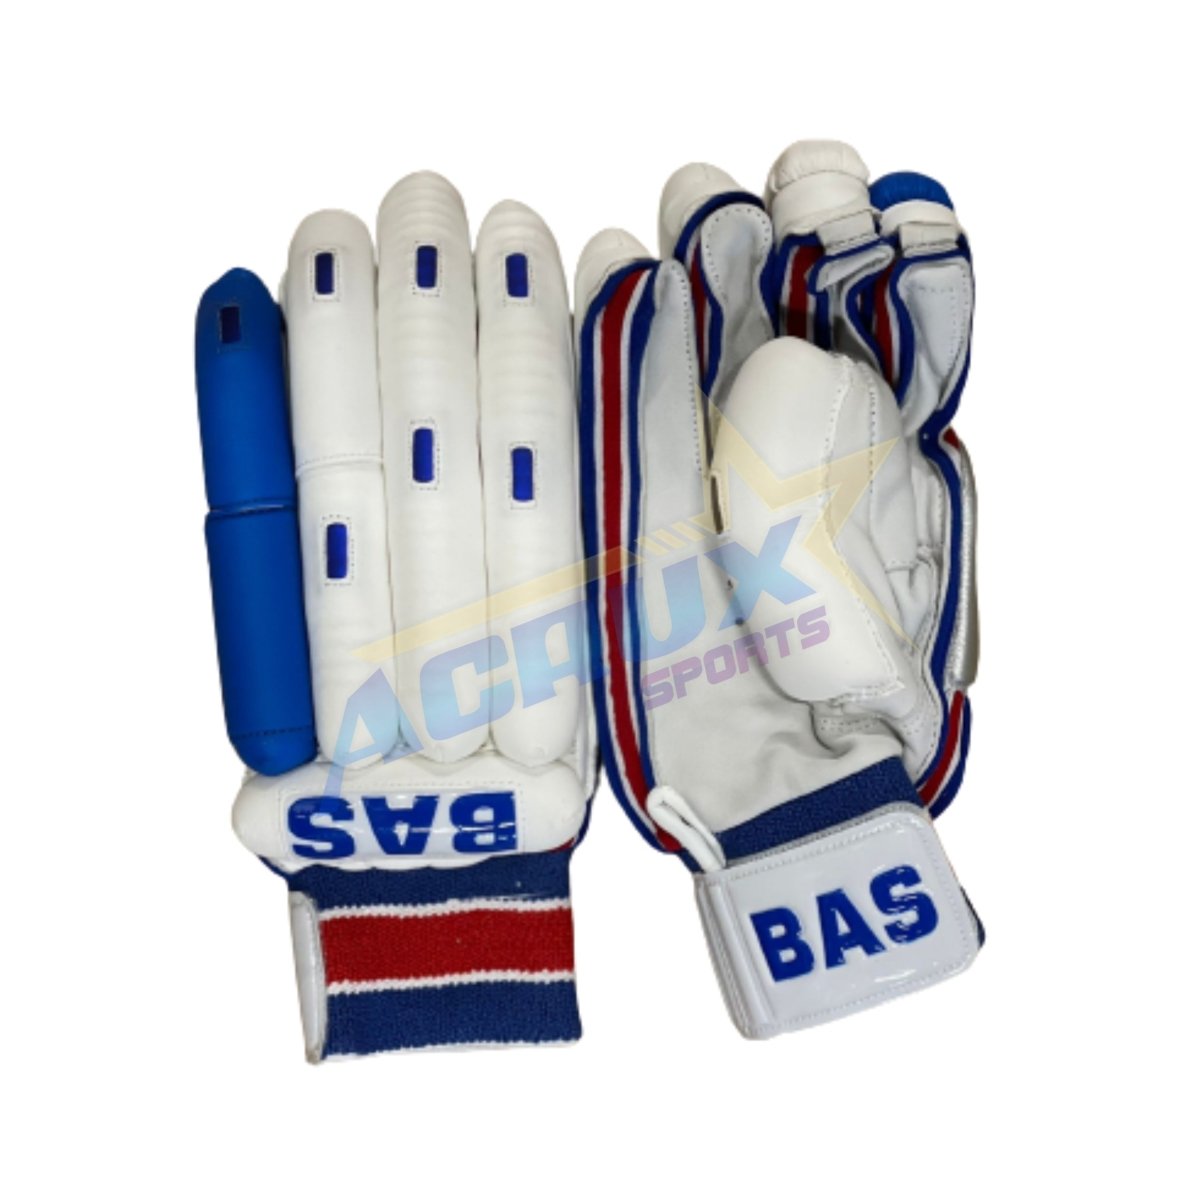 BAS Players Cricket Batting Gloves